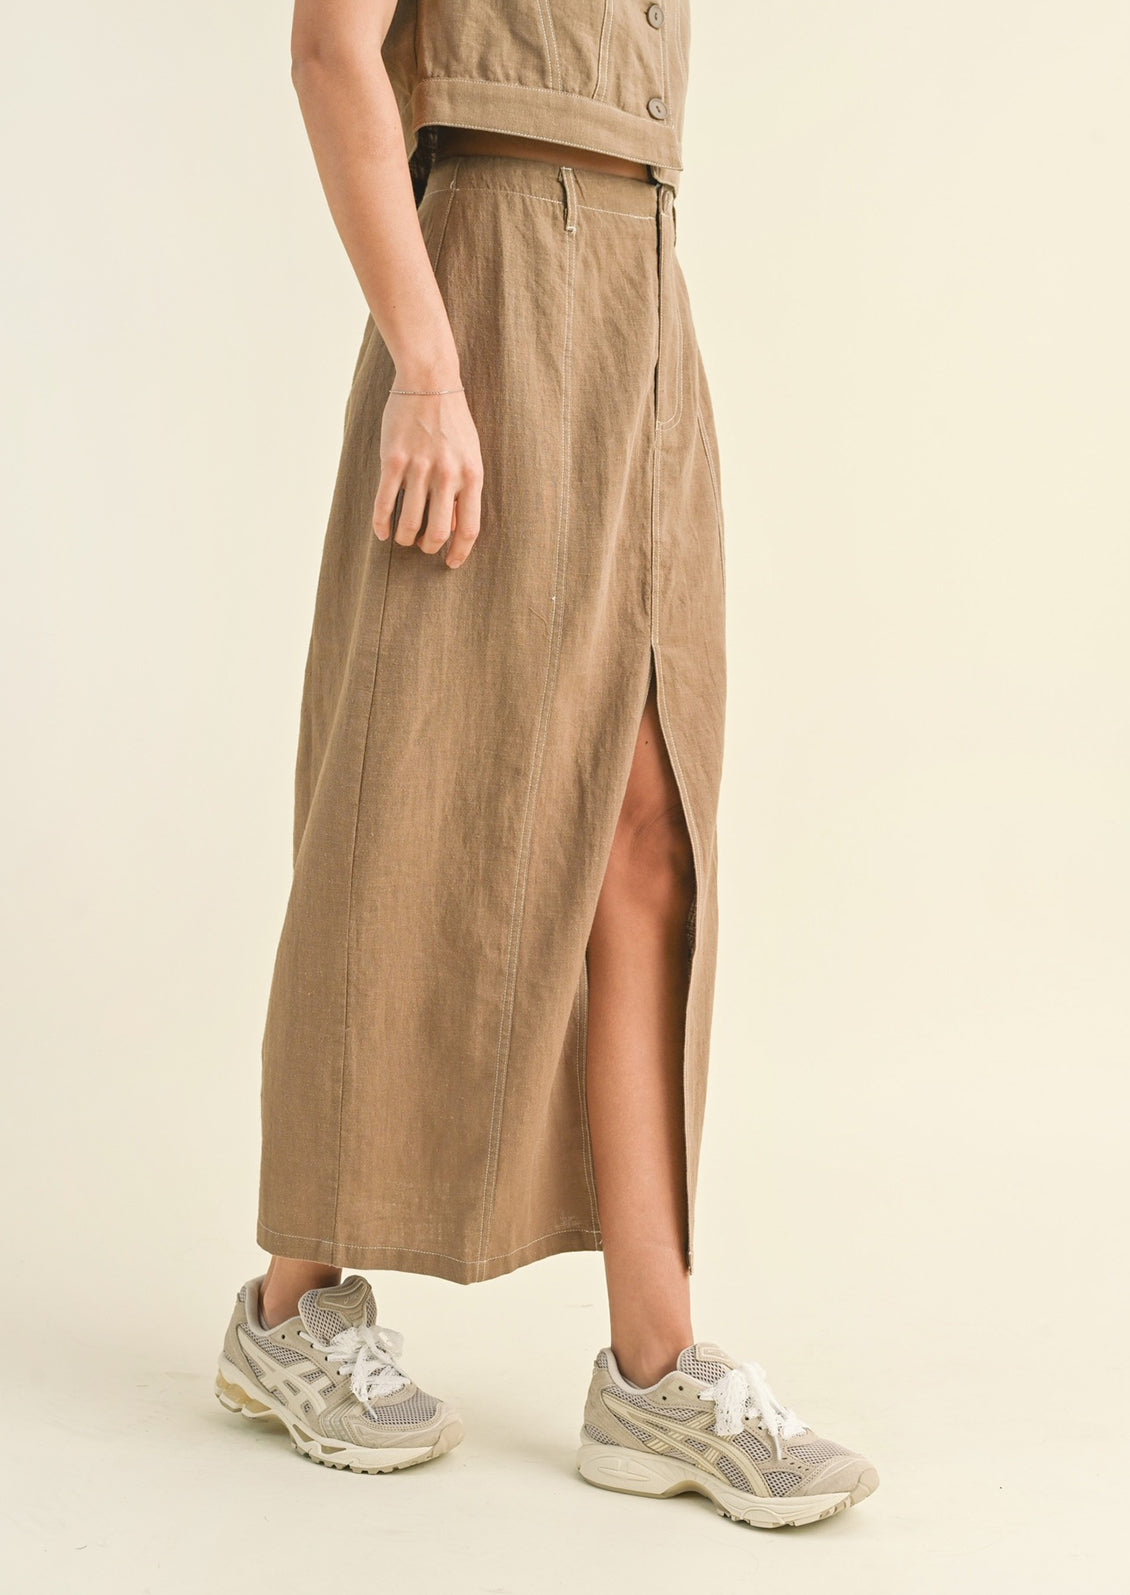 Woman wearing tan cotton midi skirt and sneakers. 